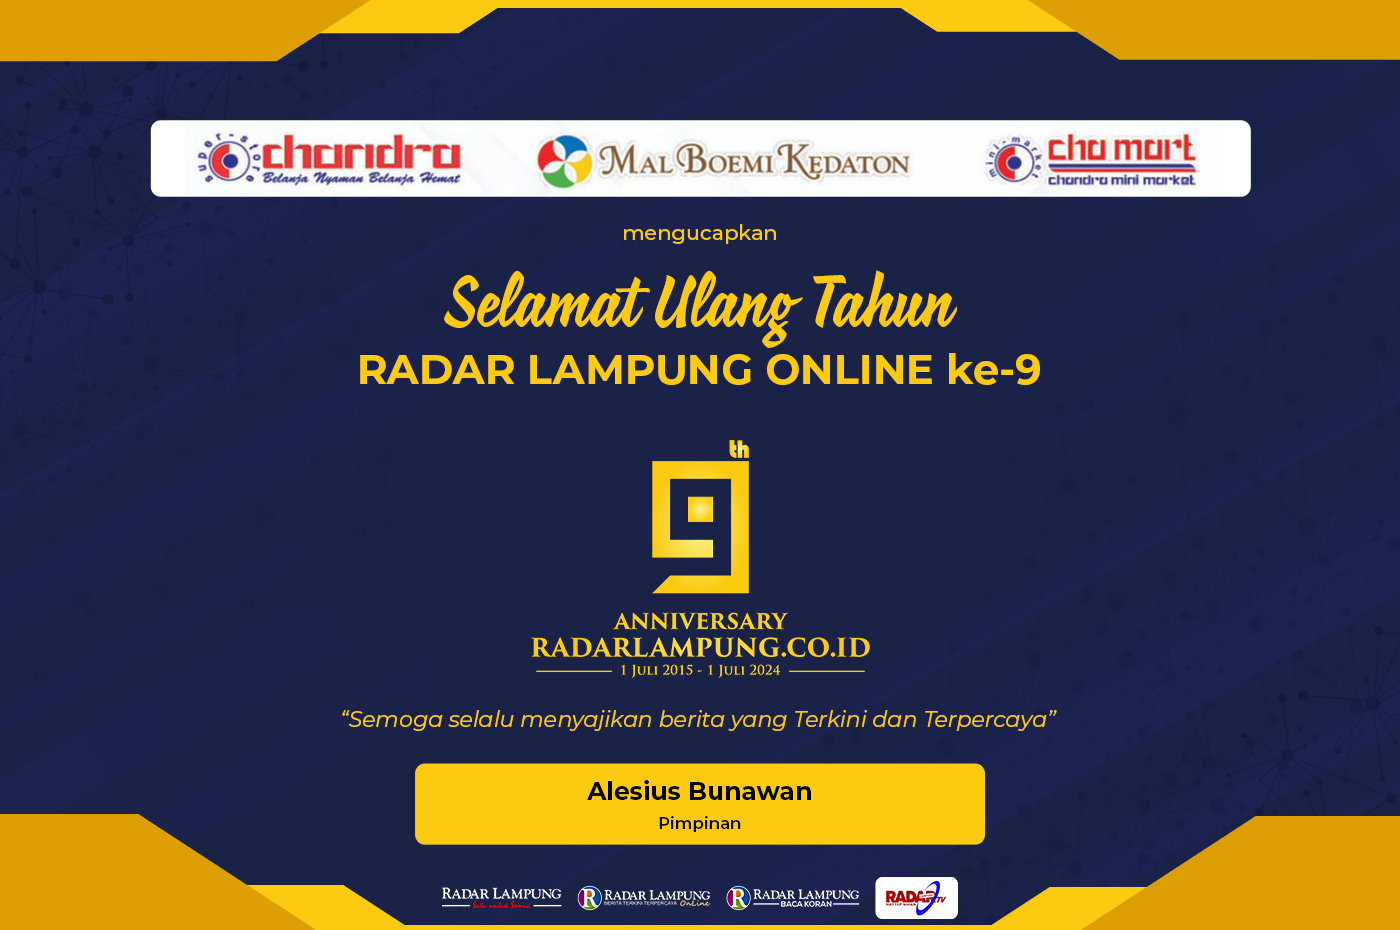 Chandra Super Store Mengucapkan Selamat Ulang Tahun ke-9 Radar Lampung Online